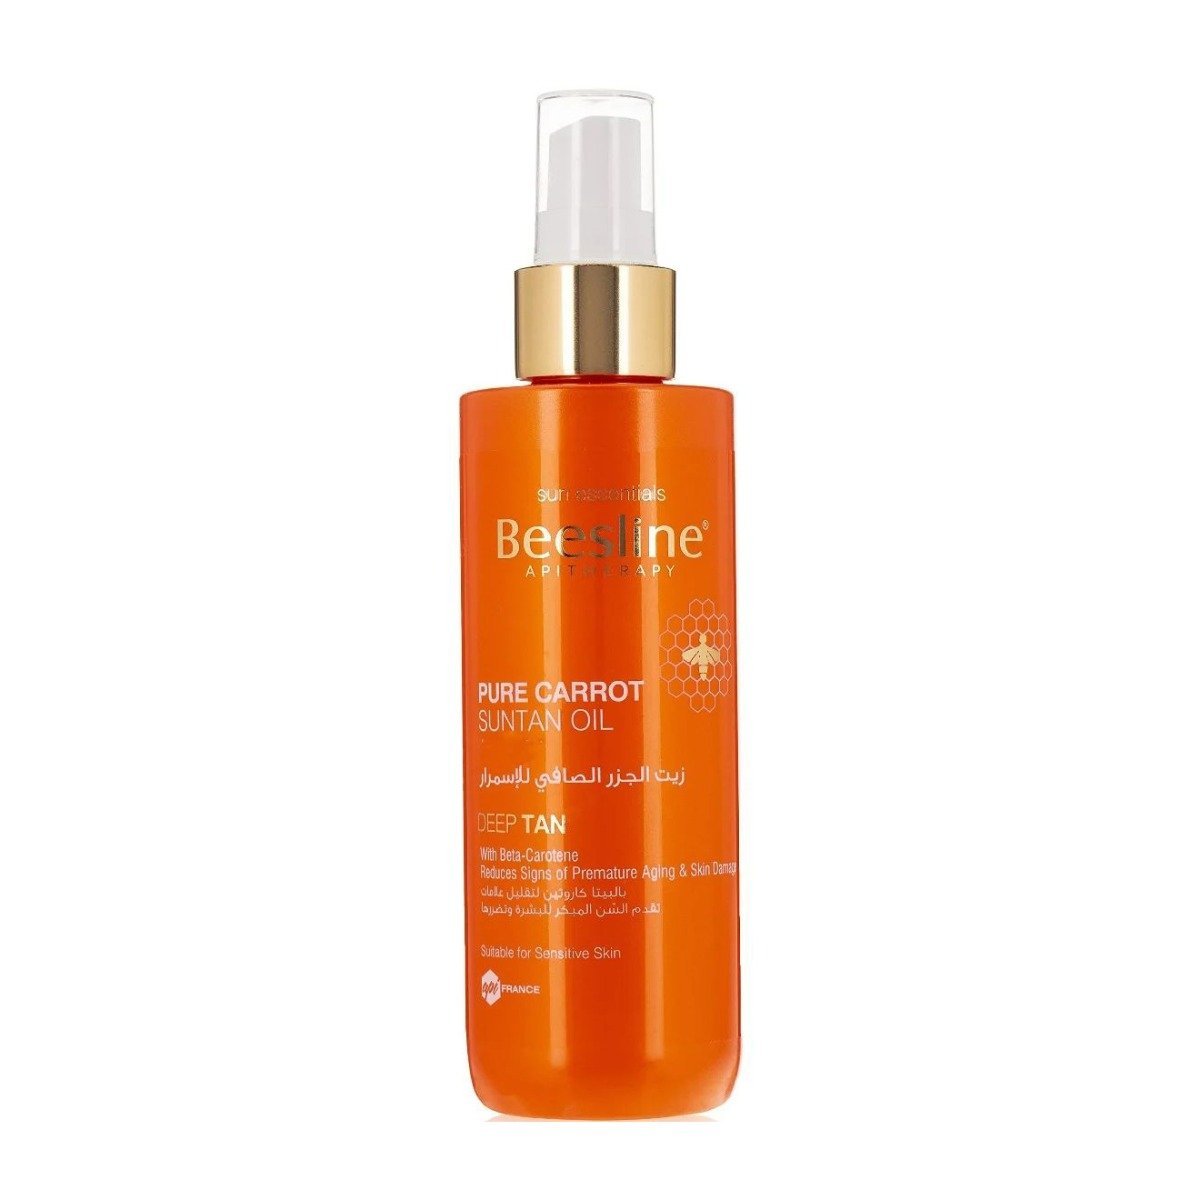 Beesline Pure Carrot Sun Tan Oil Spray - 200ml - Bloom Pharmacy